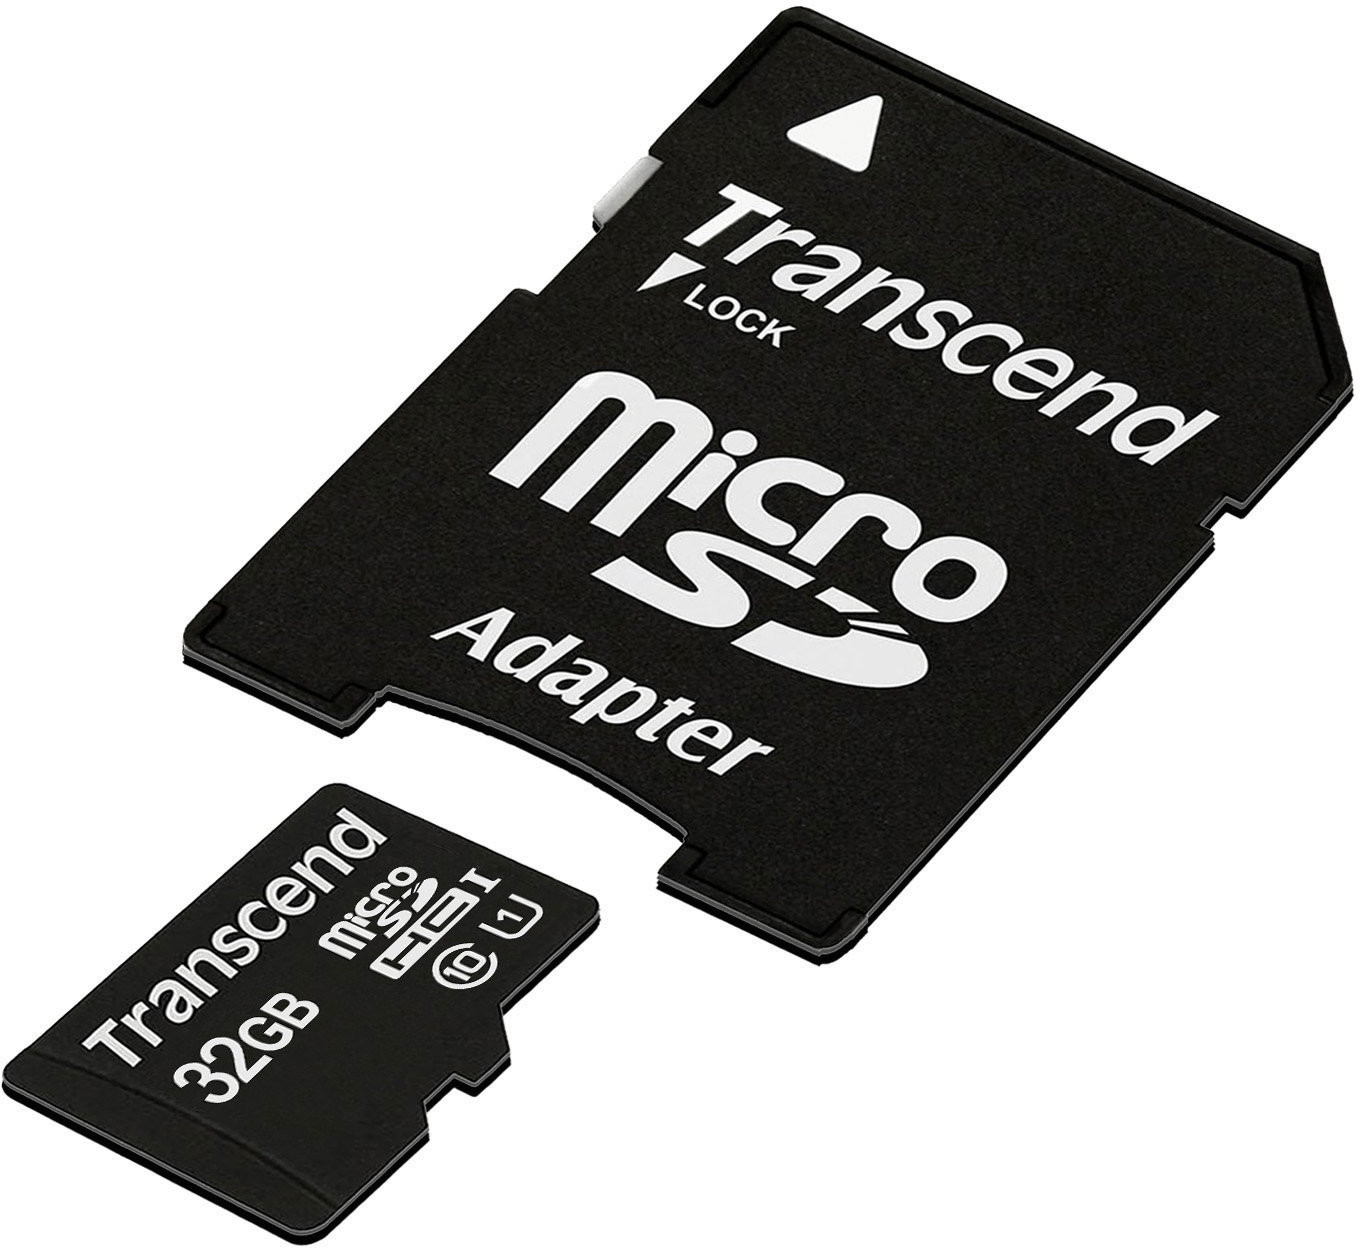 Transcend microSDHC 32GB Class 10 UHS-I (TS32GUSDU1)